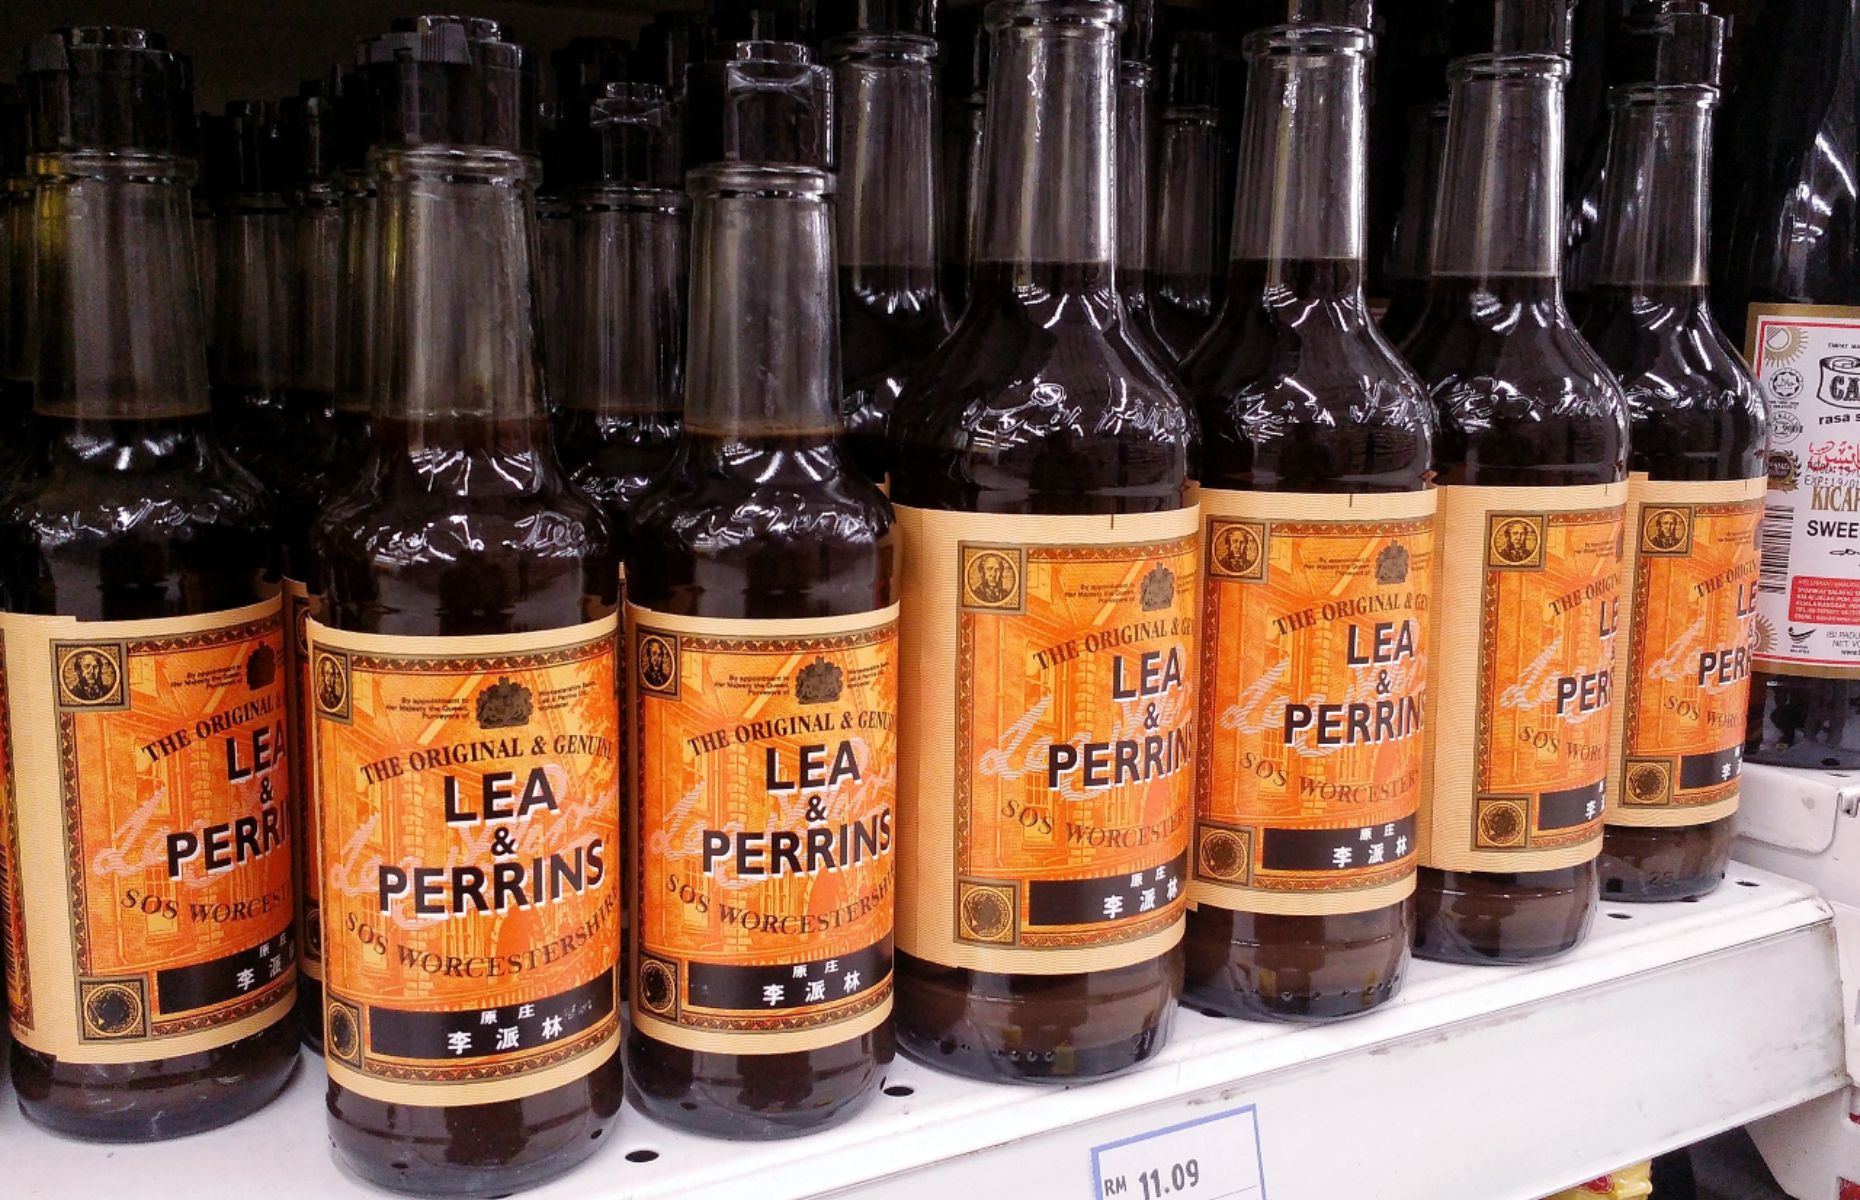 Worcestershire sauce on supermarket shelves in Malaysia (Image: Faizal Ramli/Shutterstock)